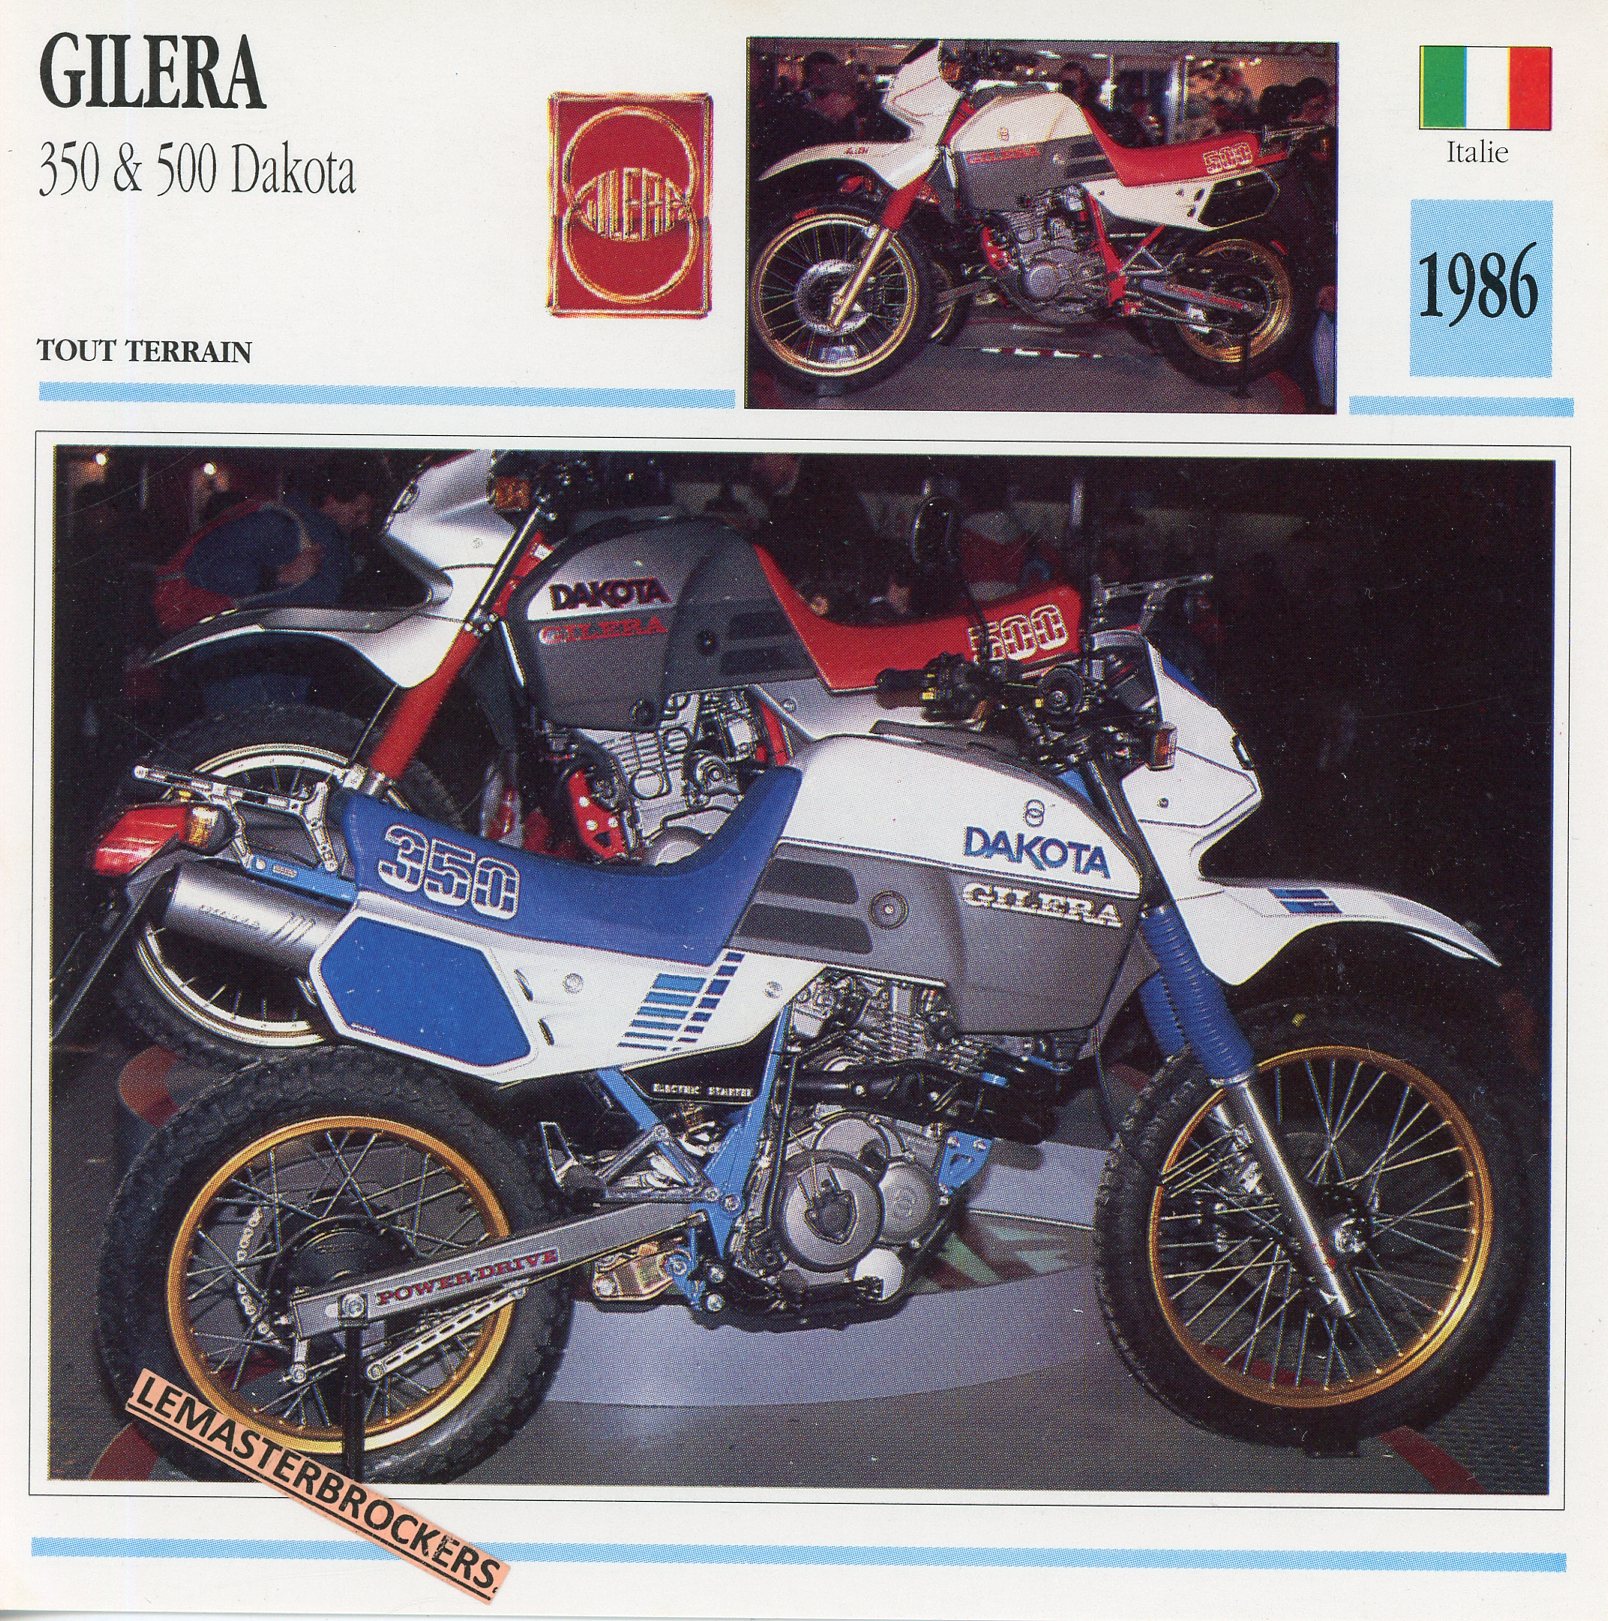 GILERA-DAKOTA-1986-FICHE-MOTO-MOTORCYCLE-CARDS-ATLAS-LEMASTERBROCKERS